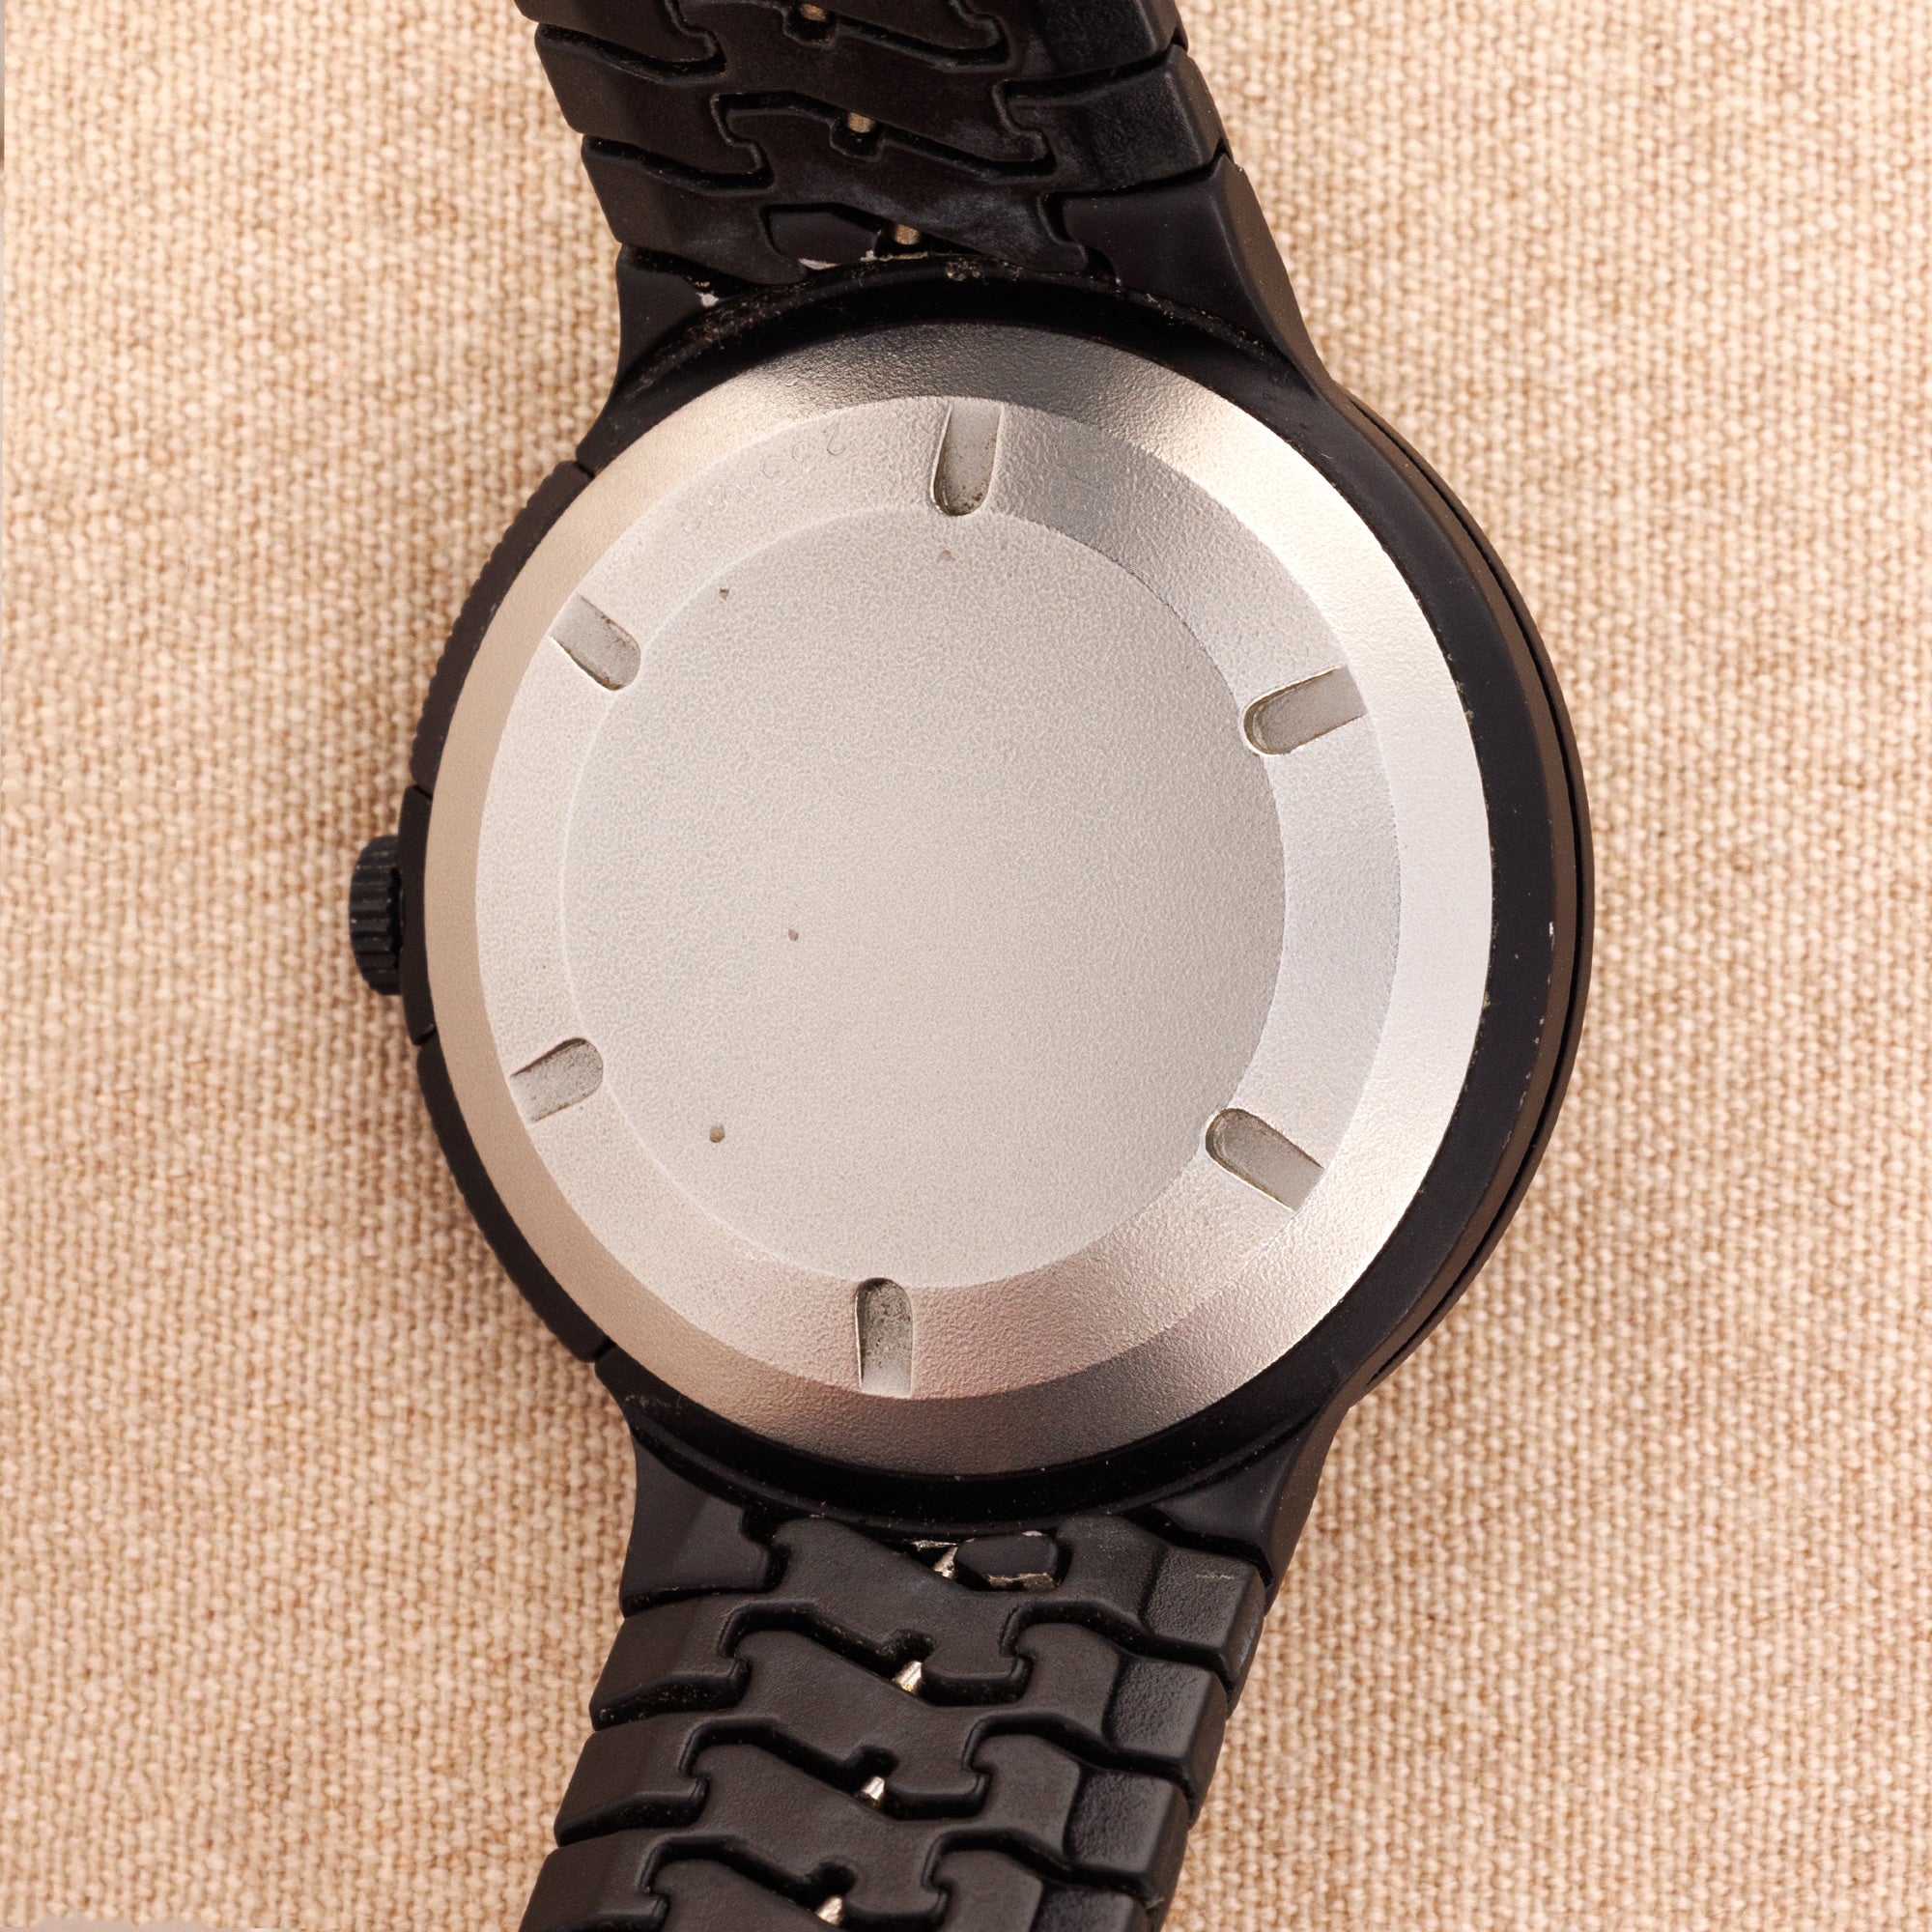 IWC - IWC Porsche Design Superlight Chronograph 02 Ref. 3701 - The Keystone Watches